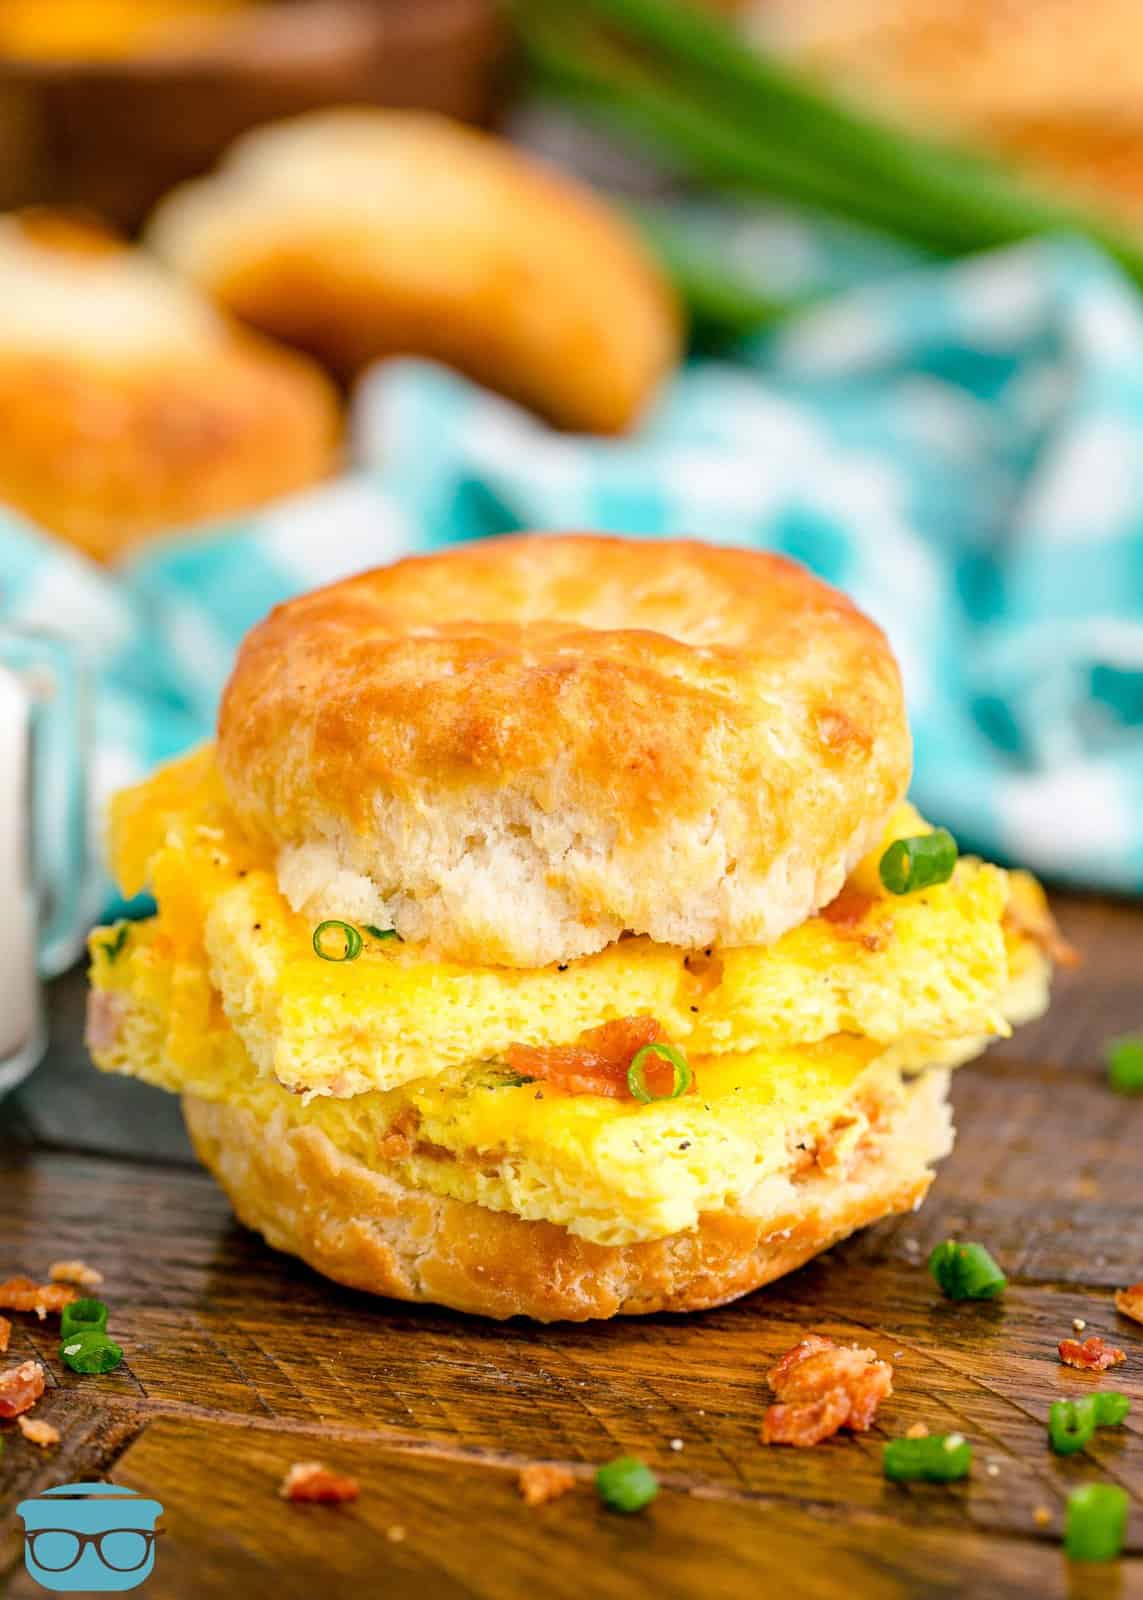 A biscuit sandwich using homemade Sheet Pan Eggs.